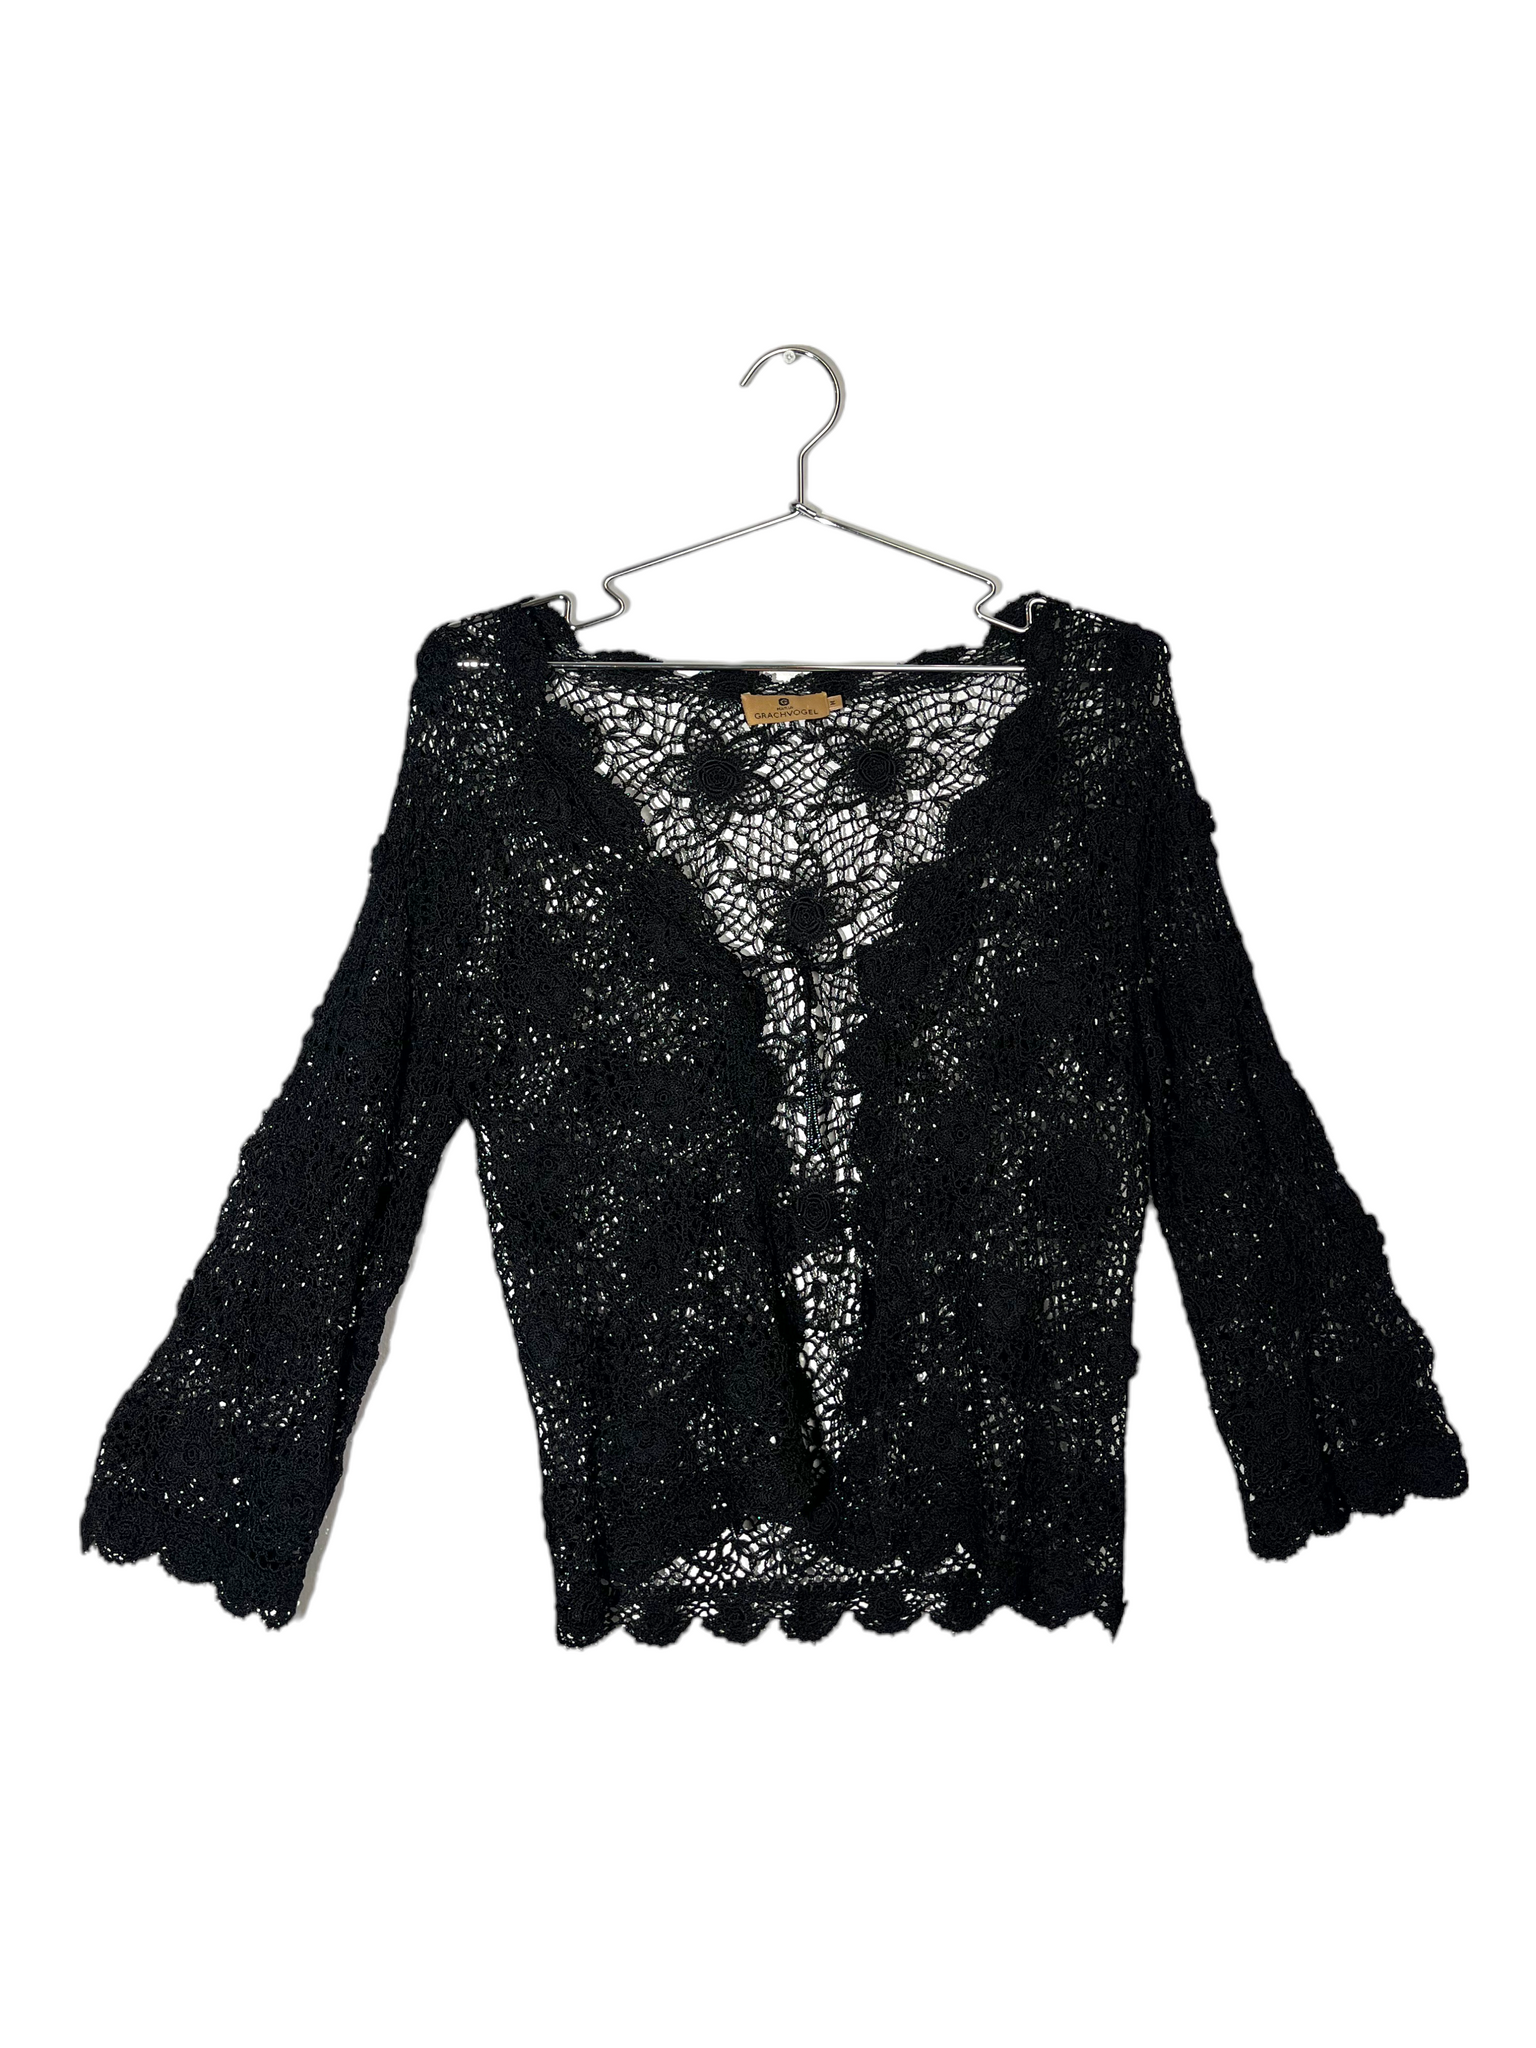 Maria Grachvogel Black Crochet Flower Top